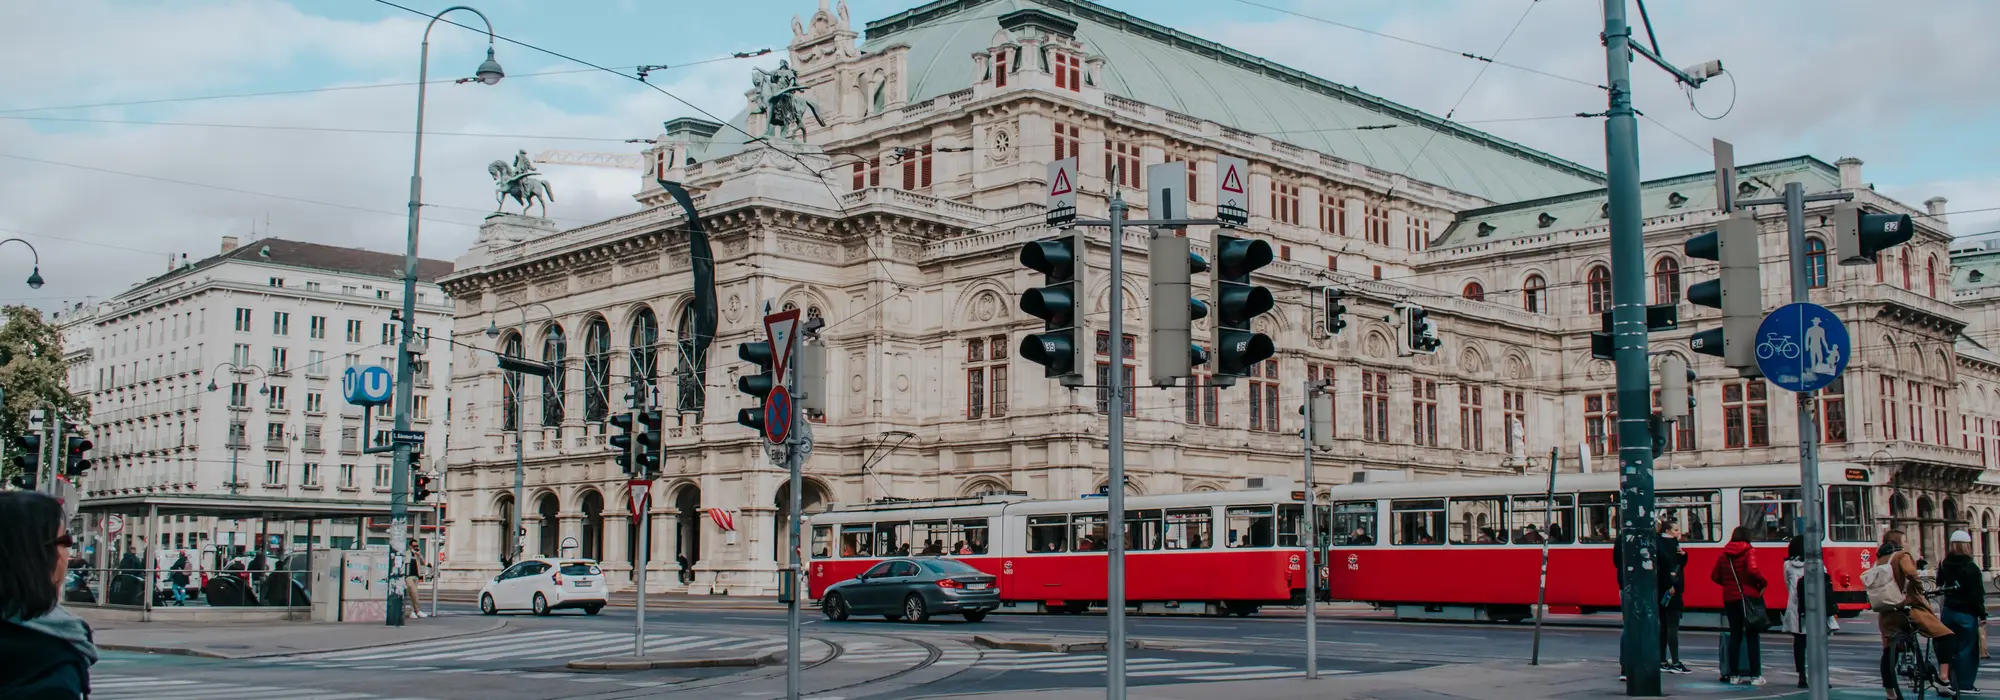 Öffentliche Verkehrsmittel in Wien © pexels.com / Ceyda Çiftci